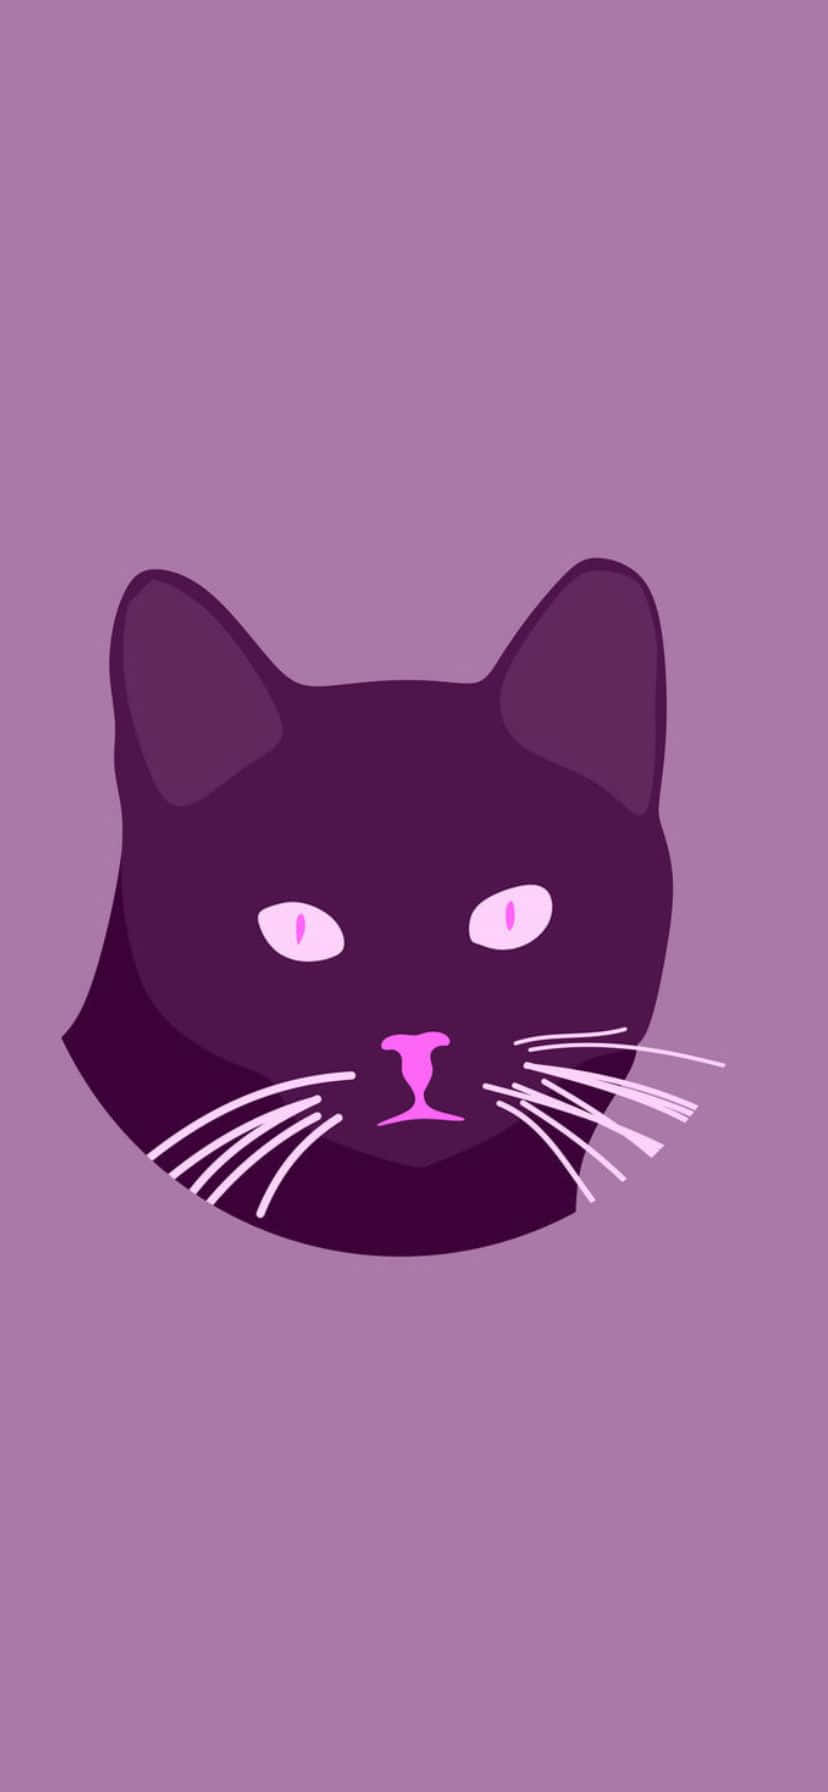 Purple Cat Illustration Wallpaper